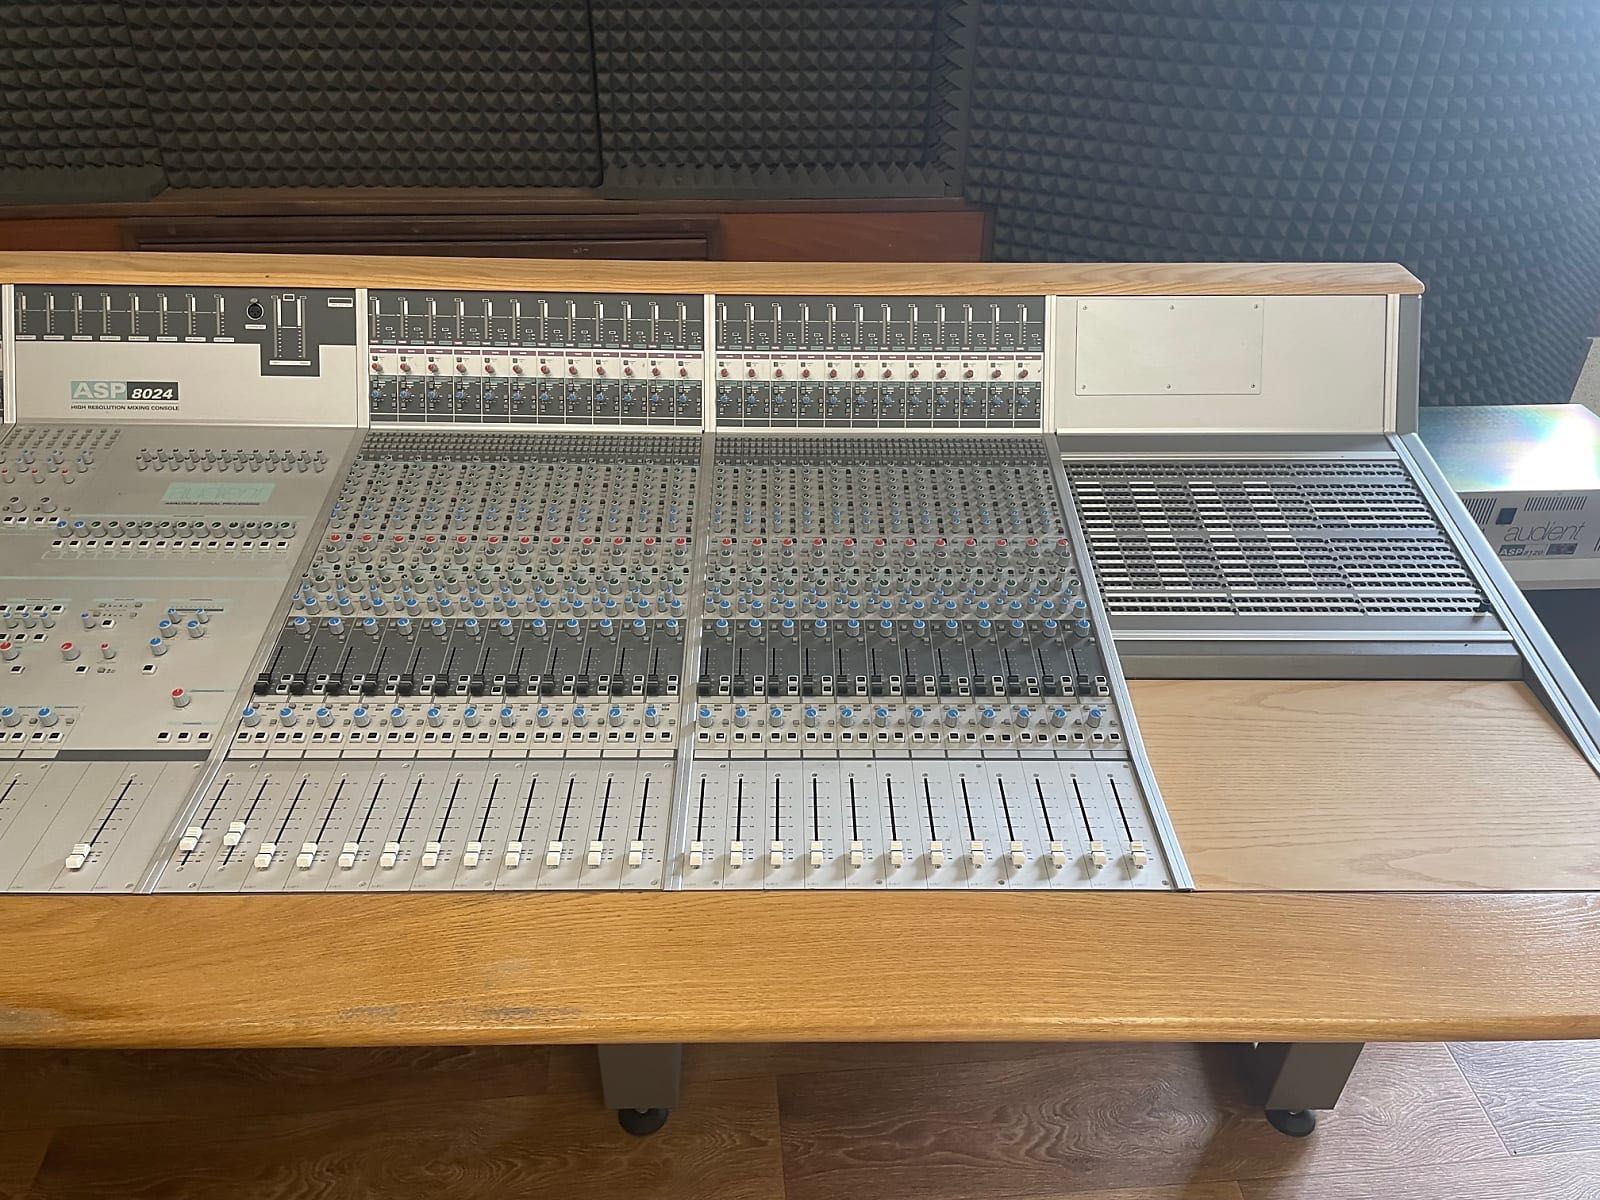 Audient ASP 8024-48PB Mixing console